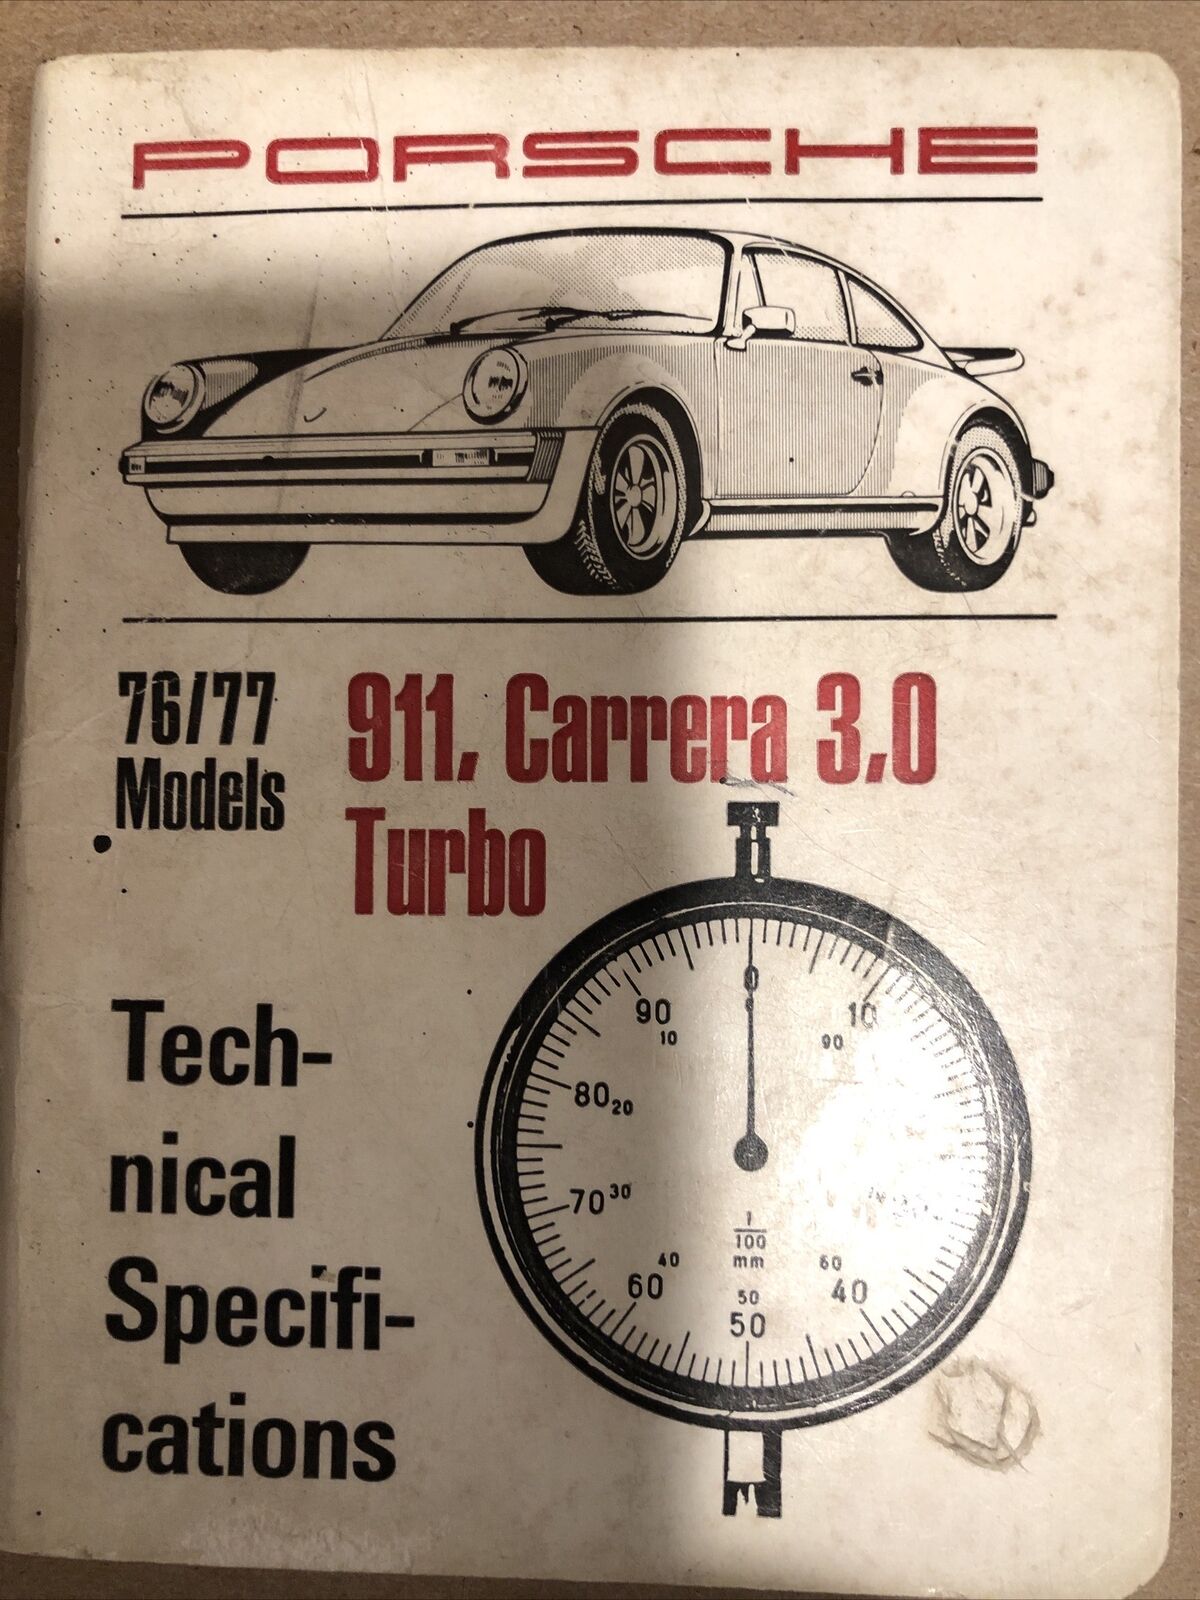 1976/77 PORSCHE 911, Carrera 3.0 Turbo Technical Specifications Booklet